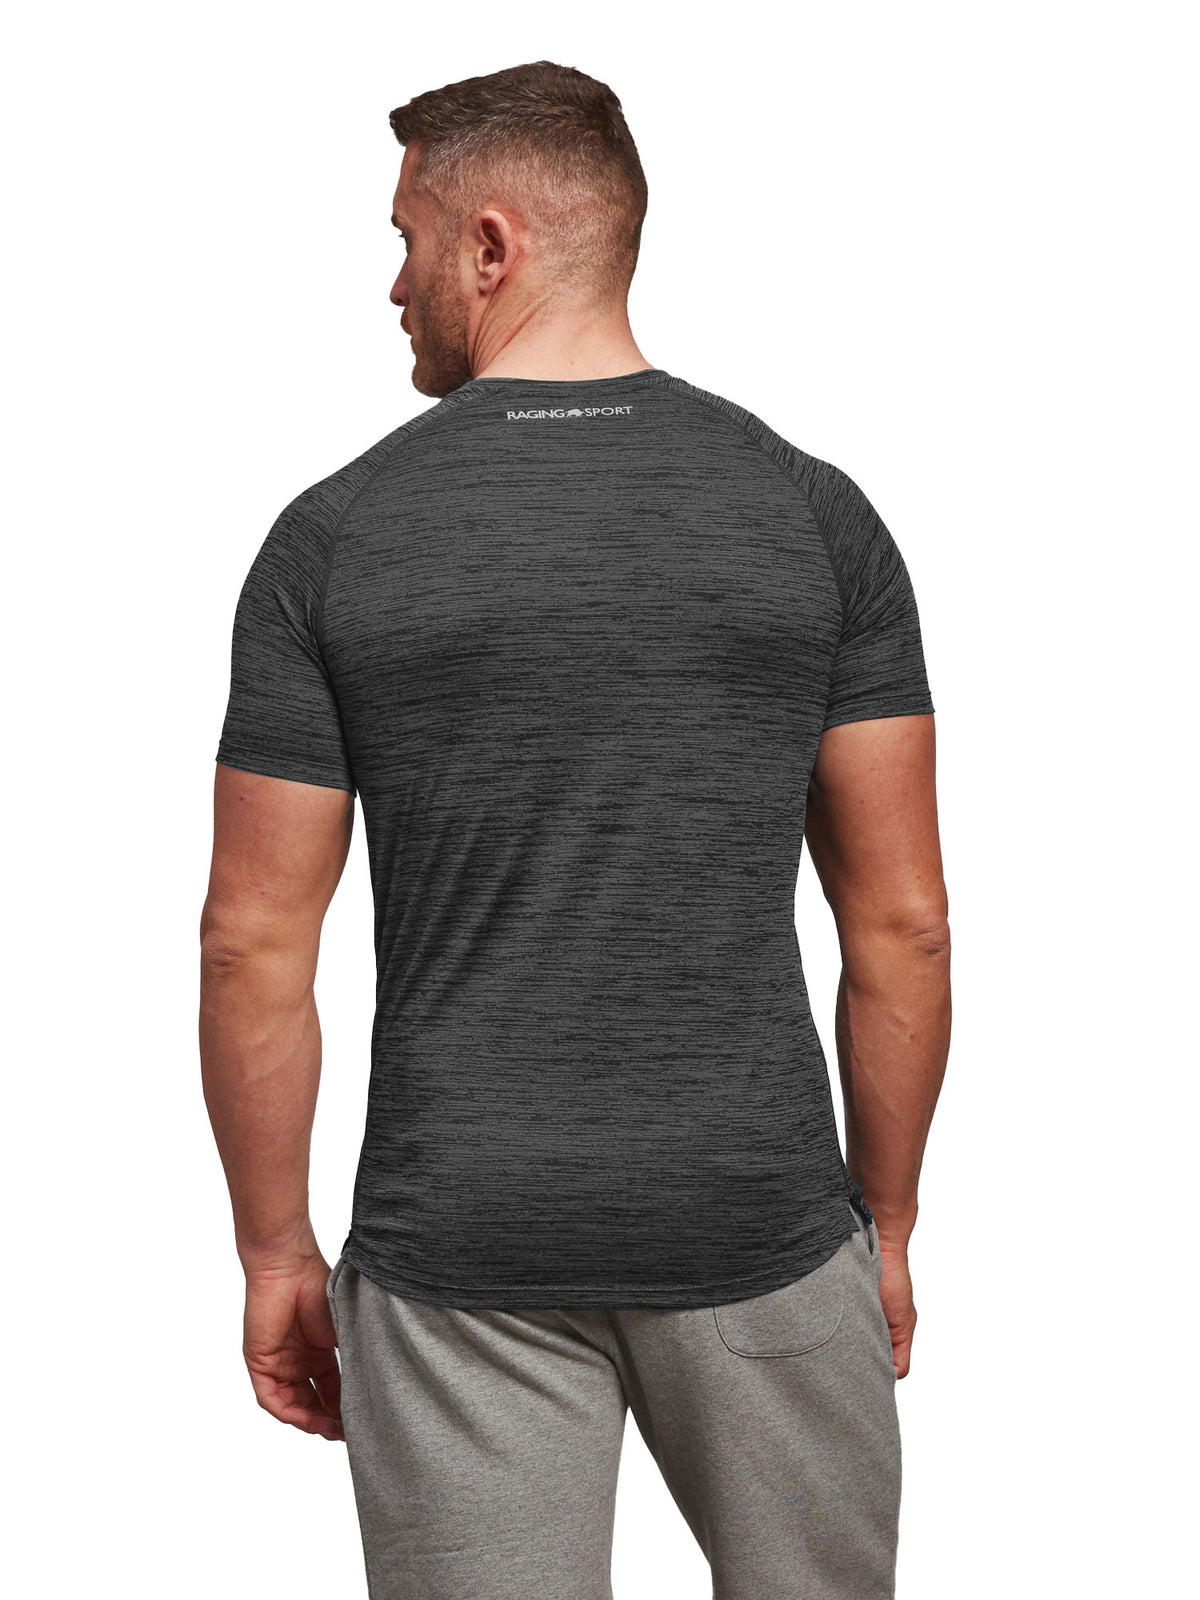 Performance T-Shirt - Dark Grey Marl